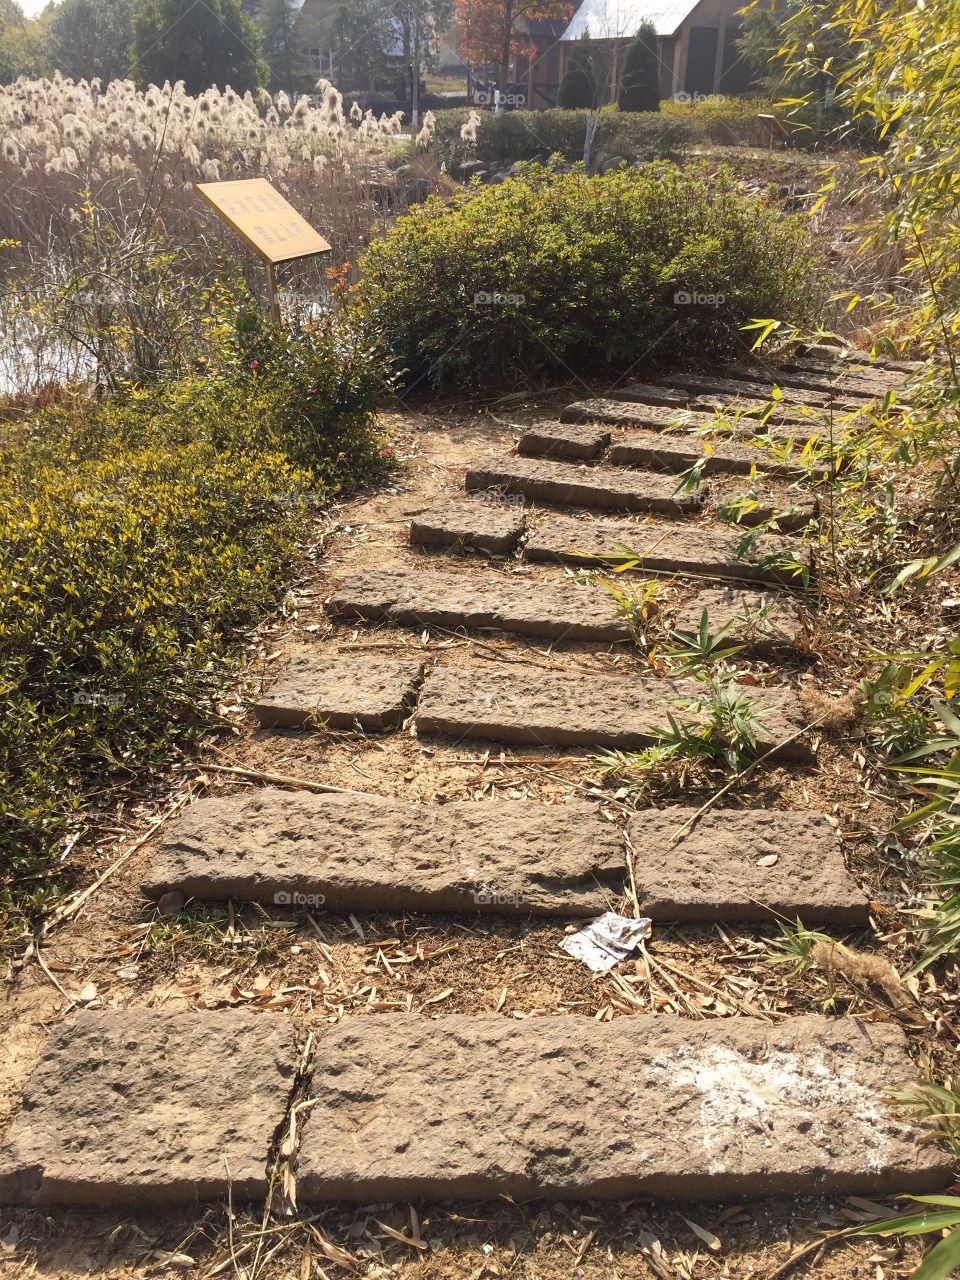 A walkway of stone bricks